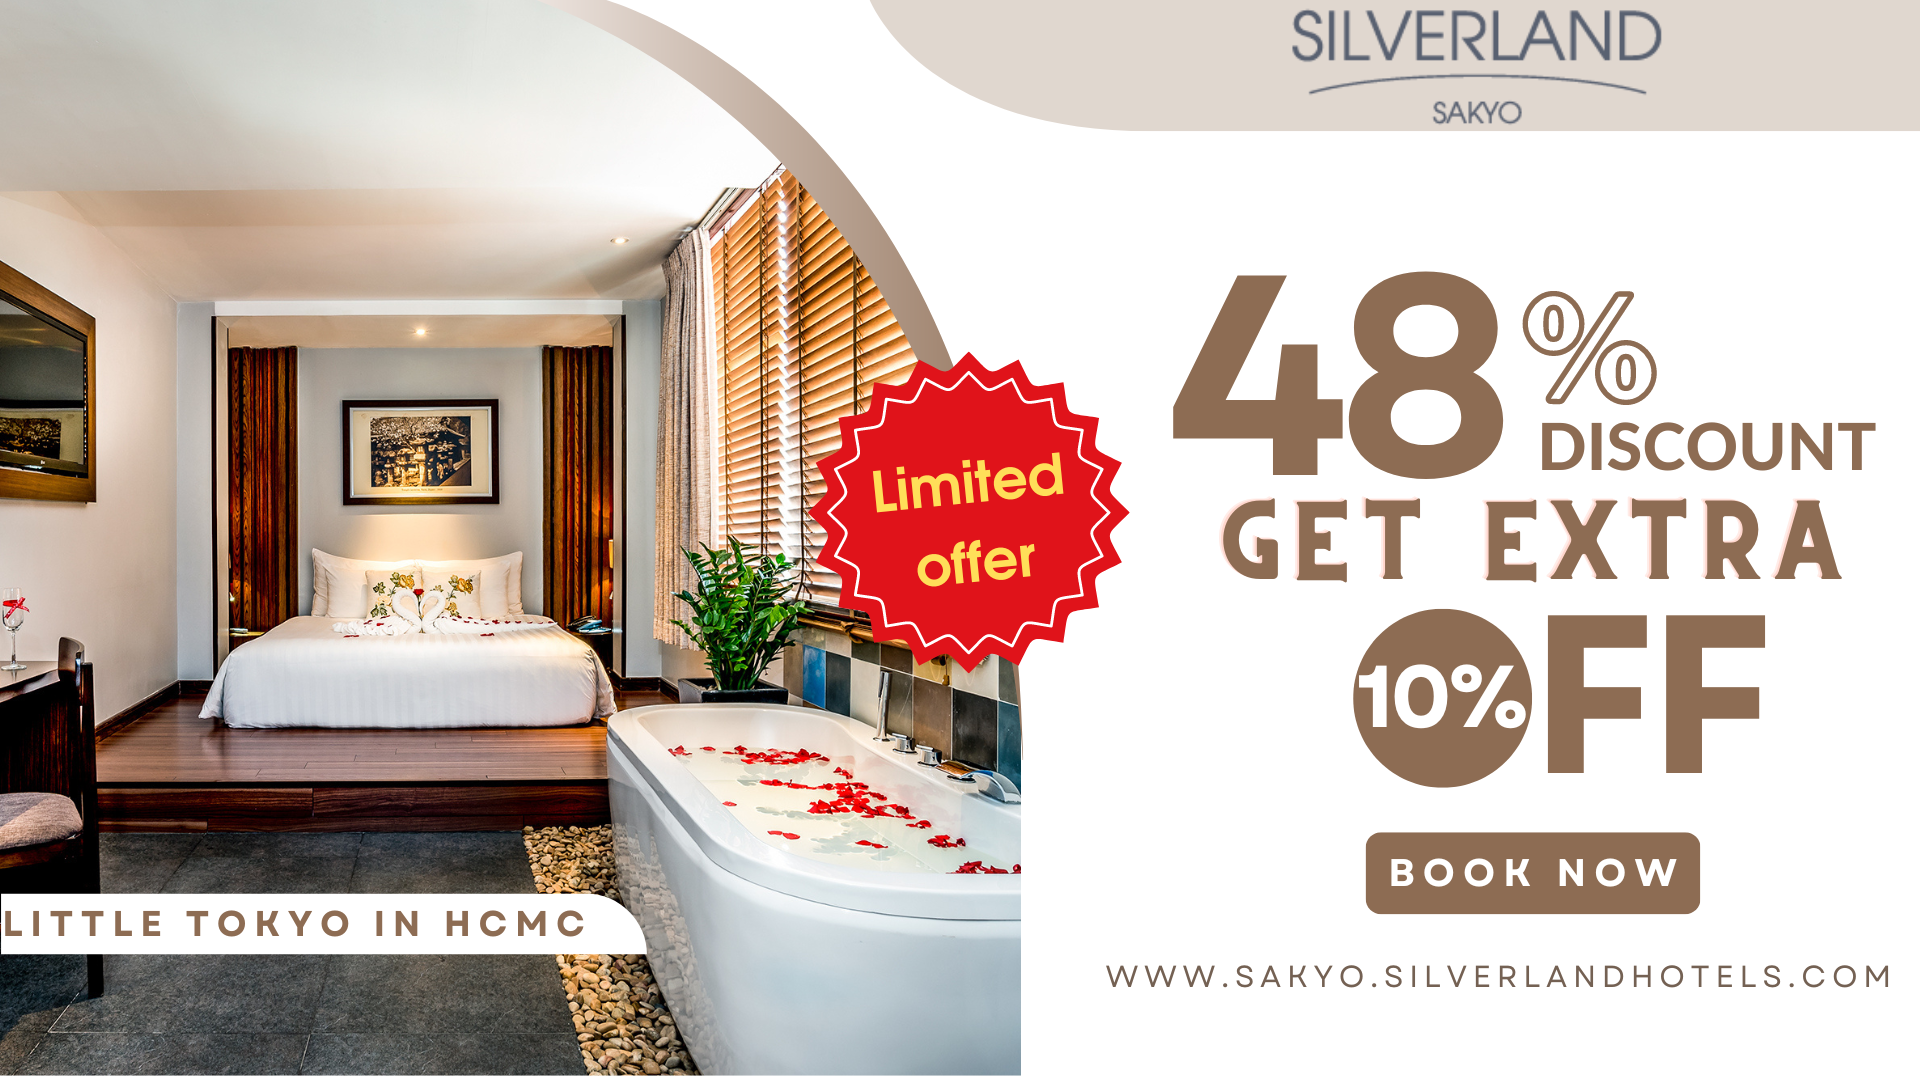 SILVERLAND SAKYO – ROOM ONLY HOTEL WEBSITE PROMOTION (SAVE 48%)